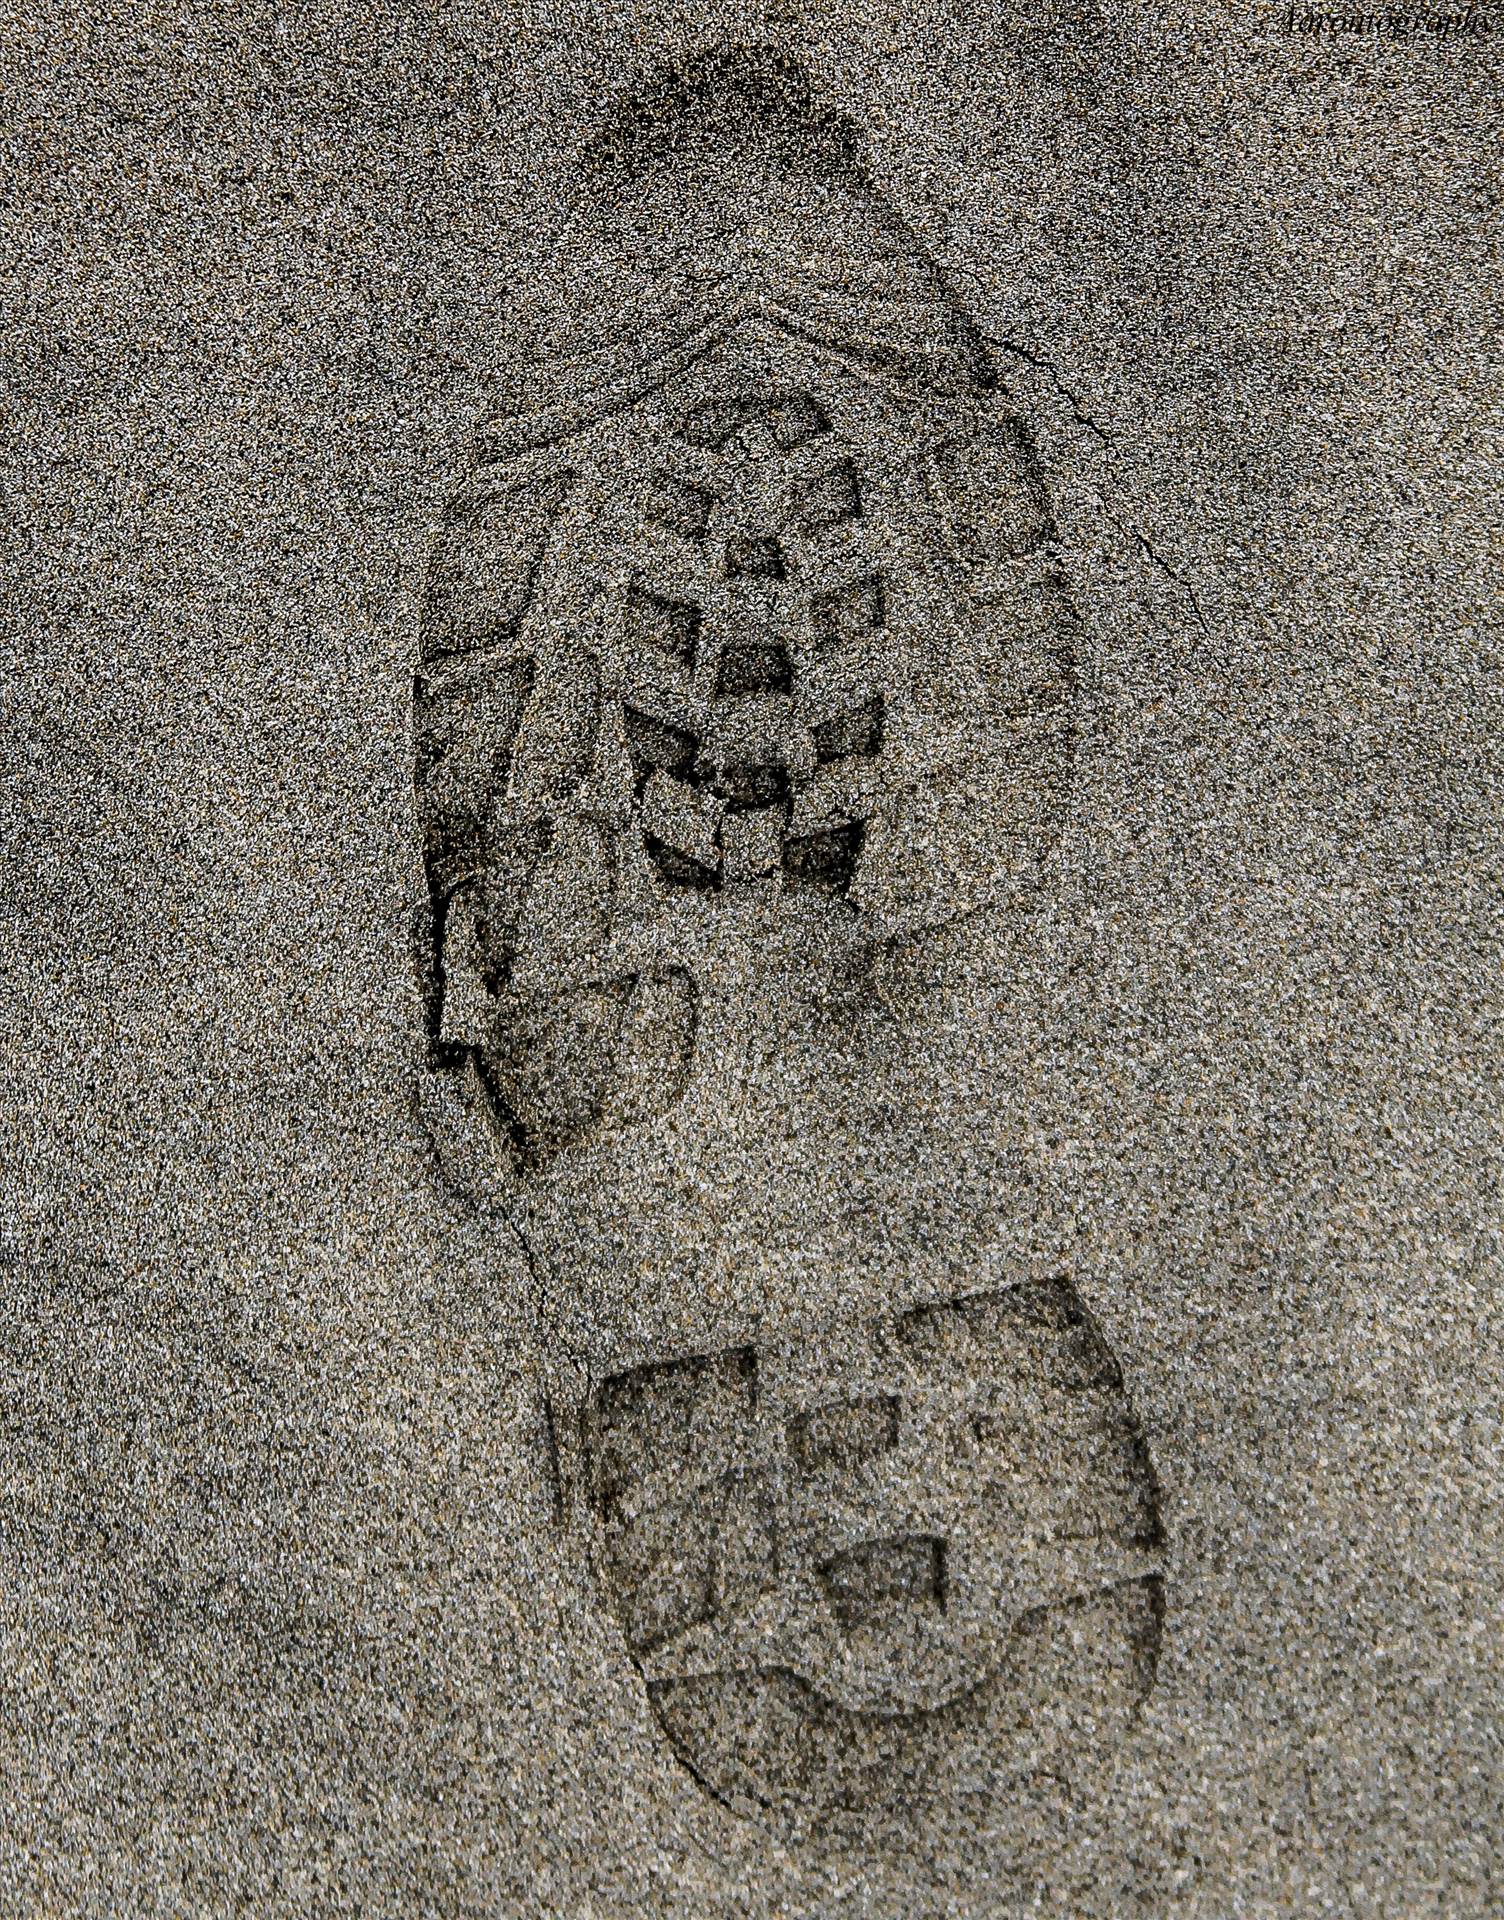 footprints.jpg undefined by Aaron